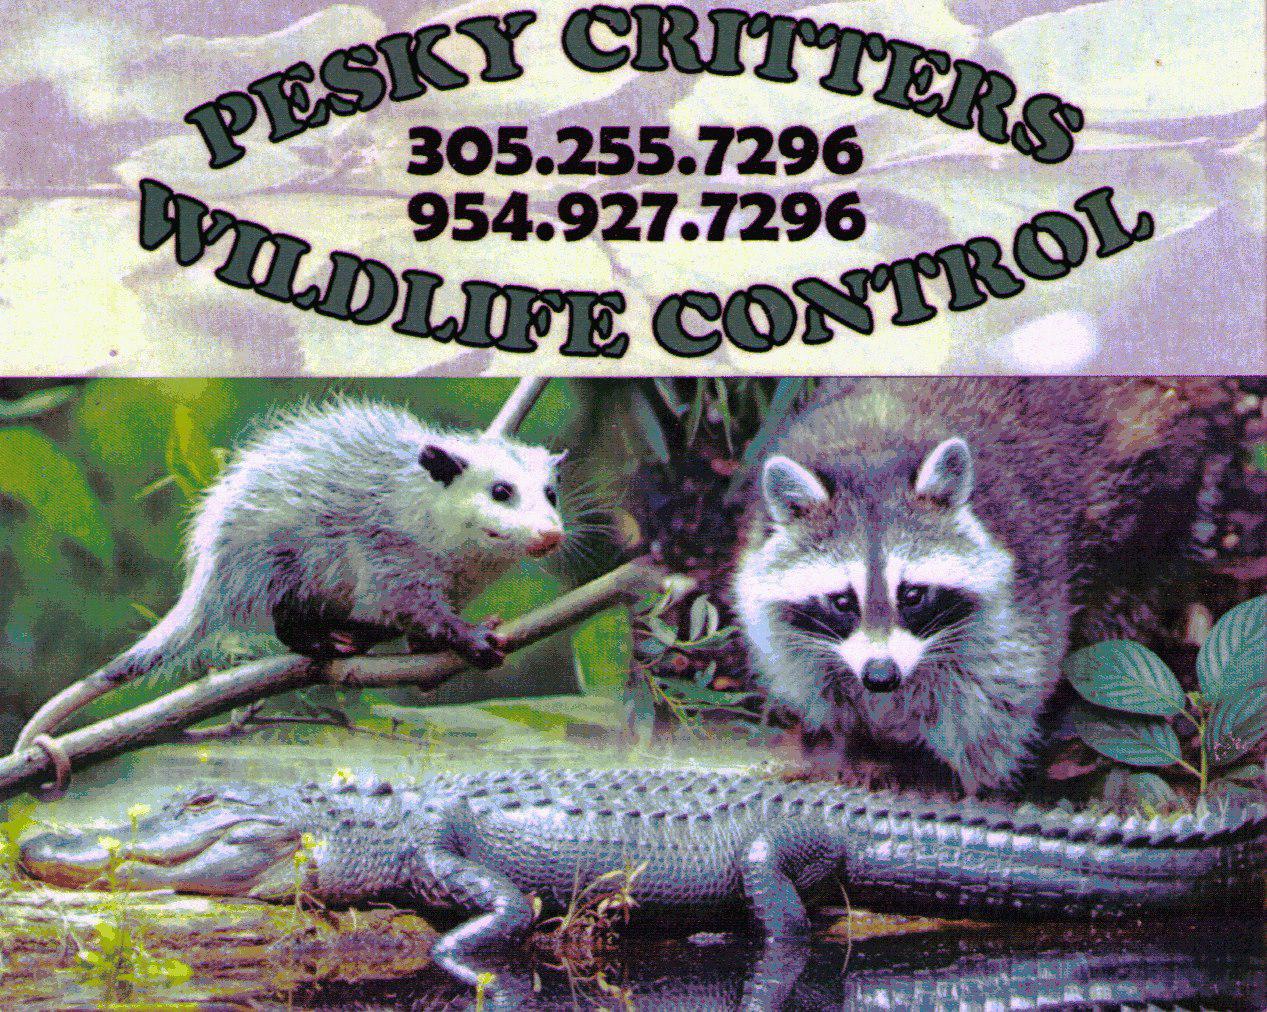 Pesky Critters Wildlife Control Logo